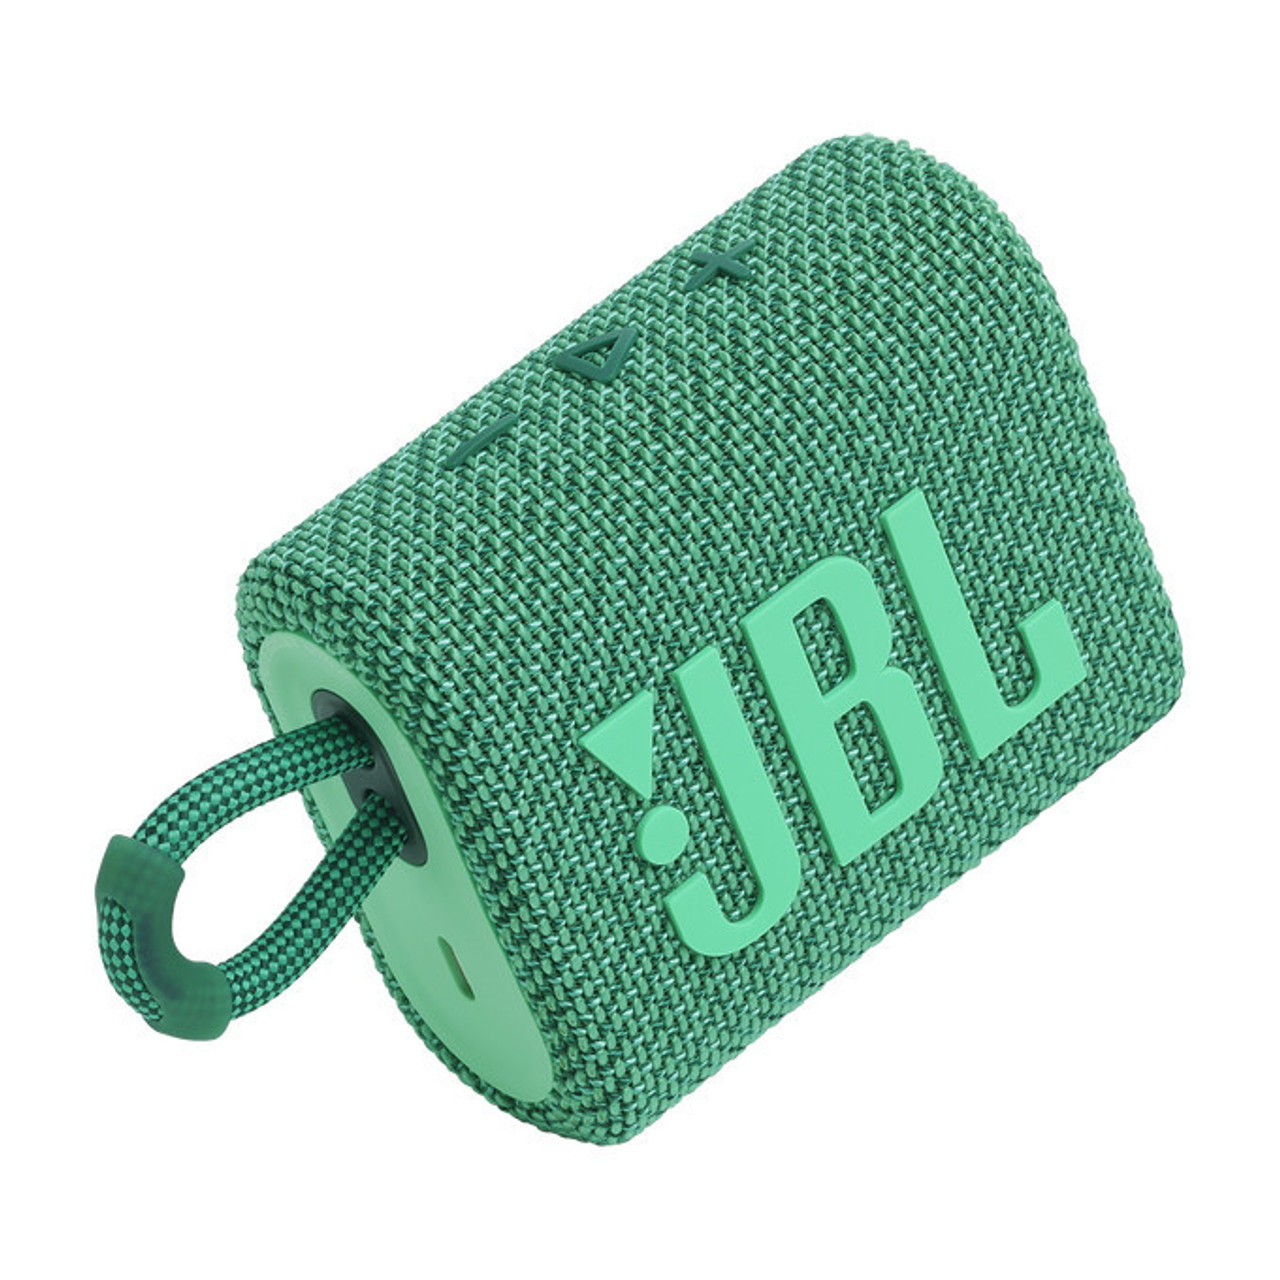 JBL Clip 4 and JBL Go 3 Portable Bluetooth Speakers